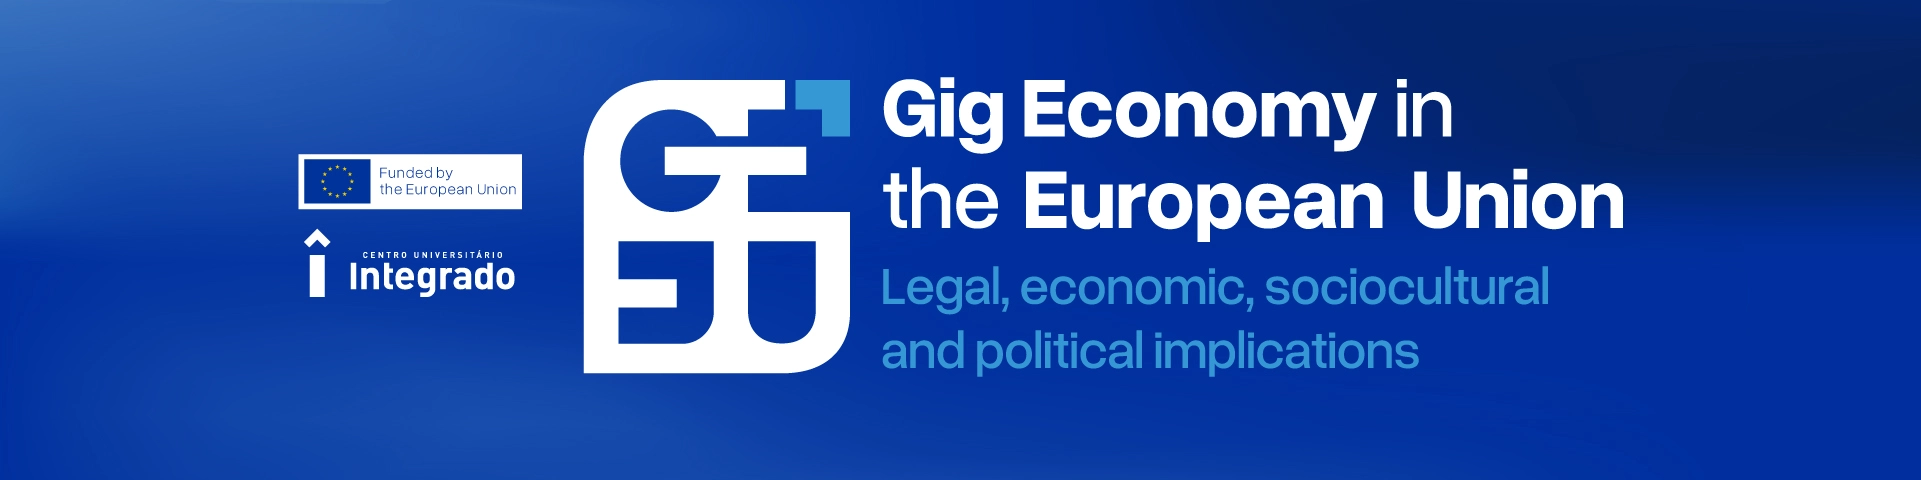 Gig Econiomy in the Eropean Union